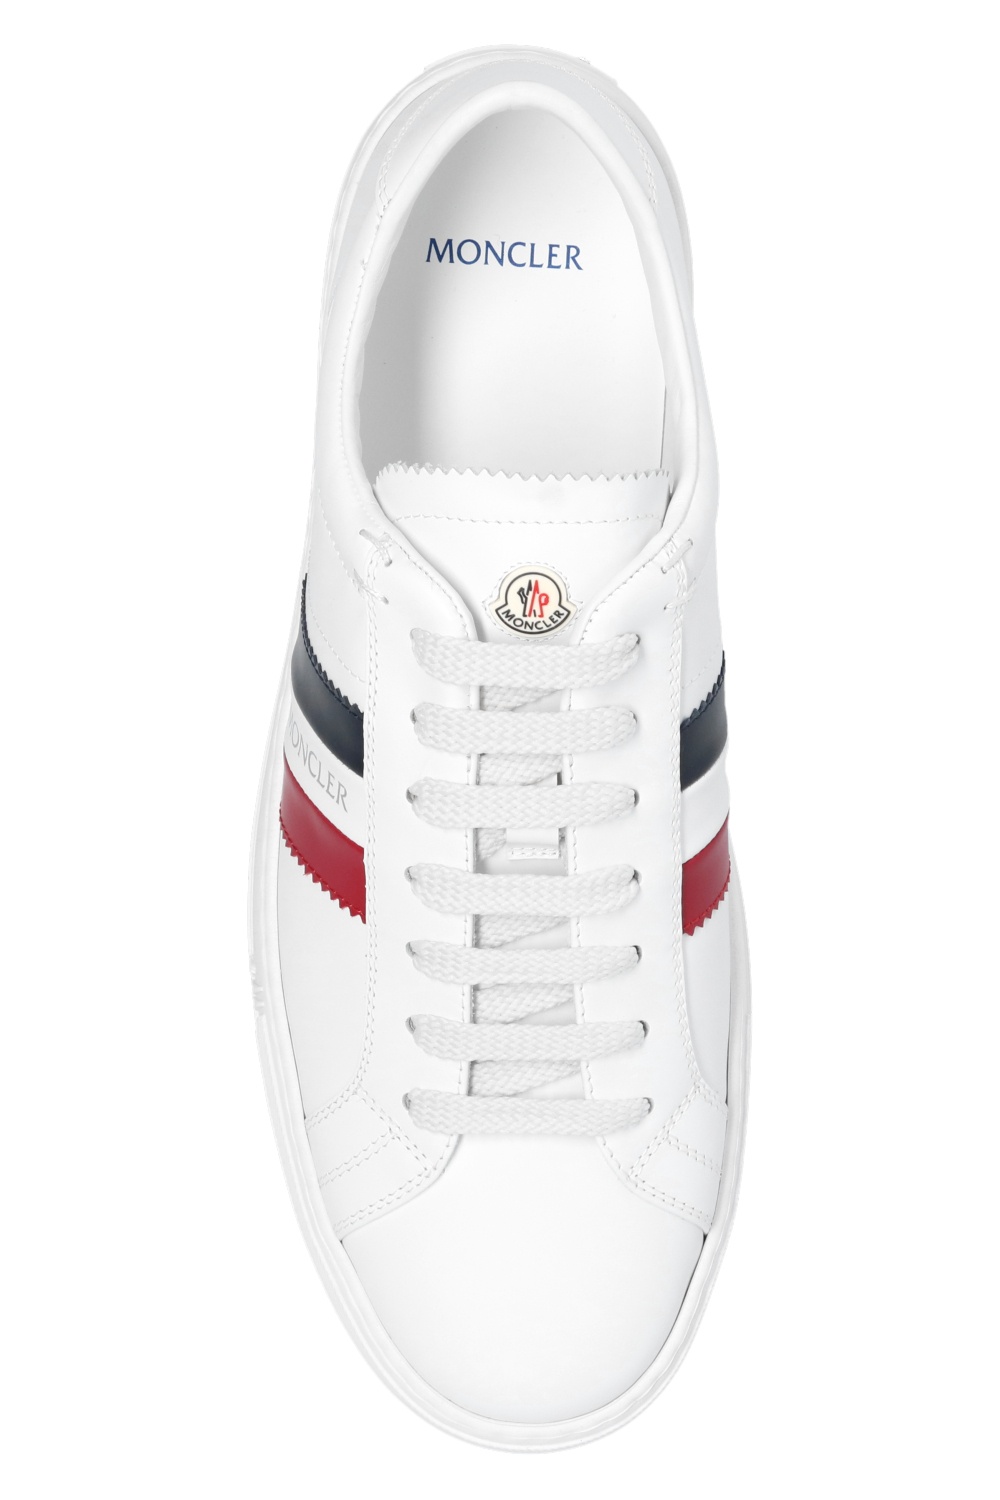 Moncler ‘New Monaco’ sneakers